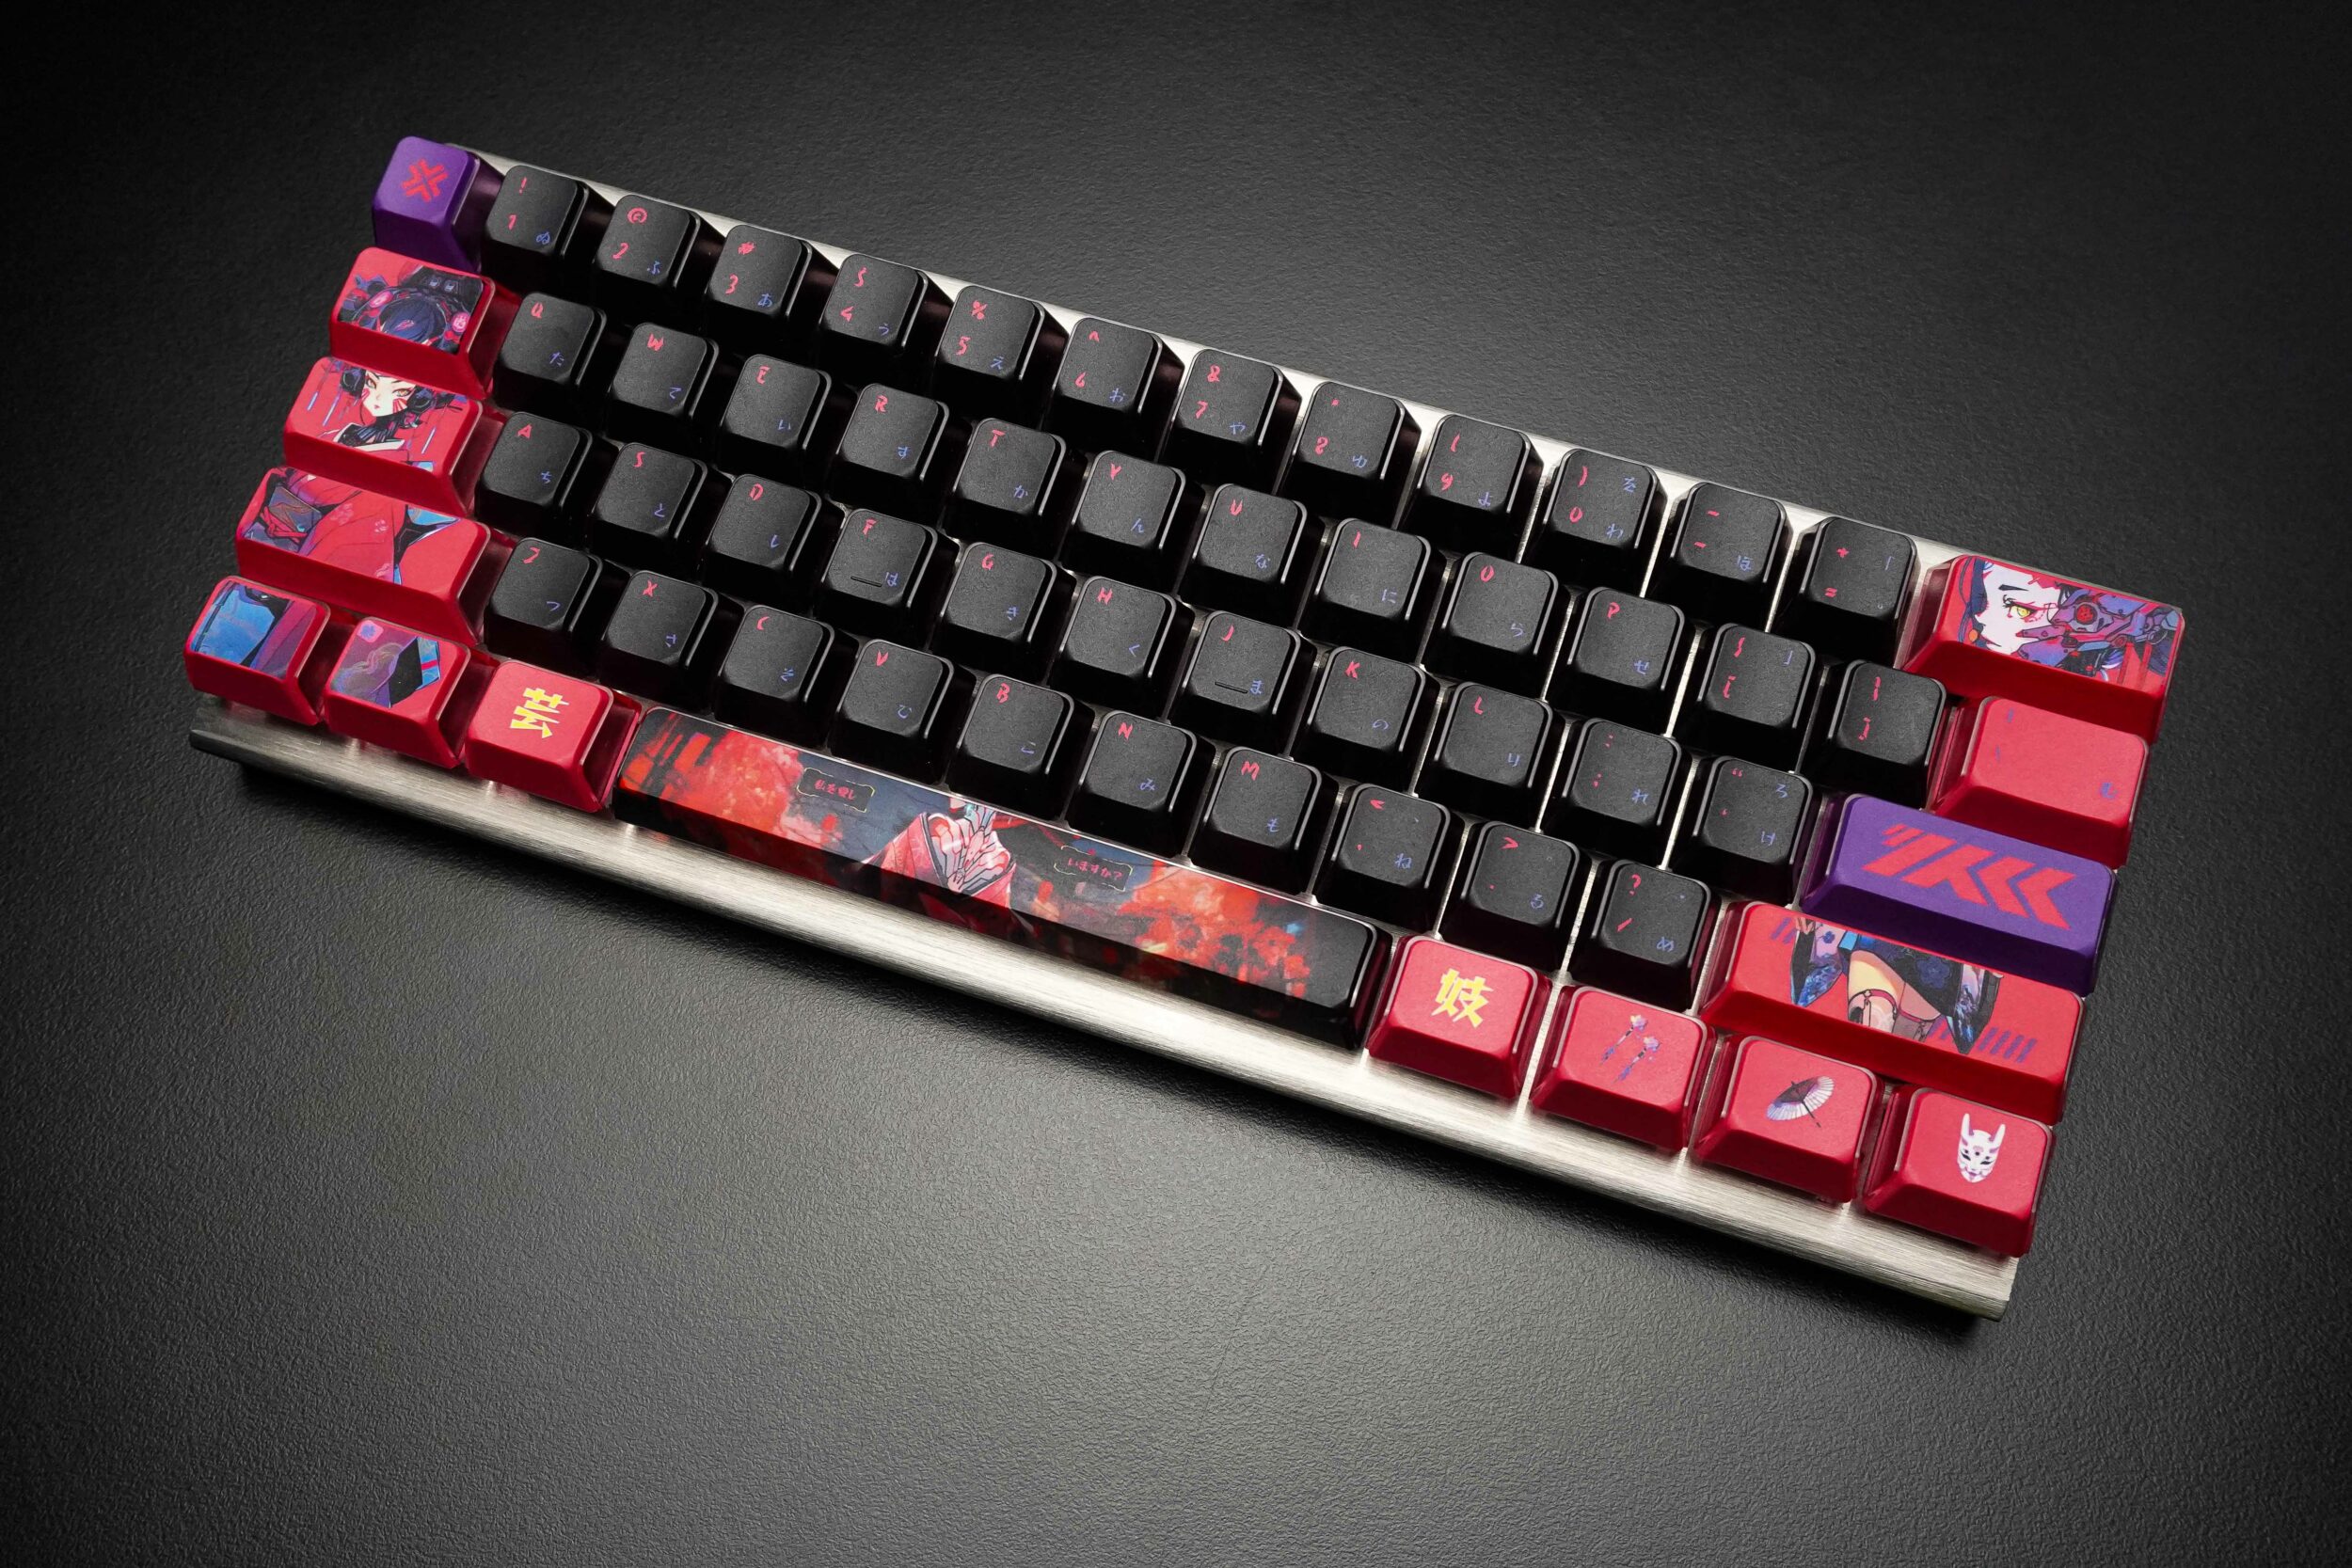 Custom 60% Board